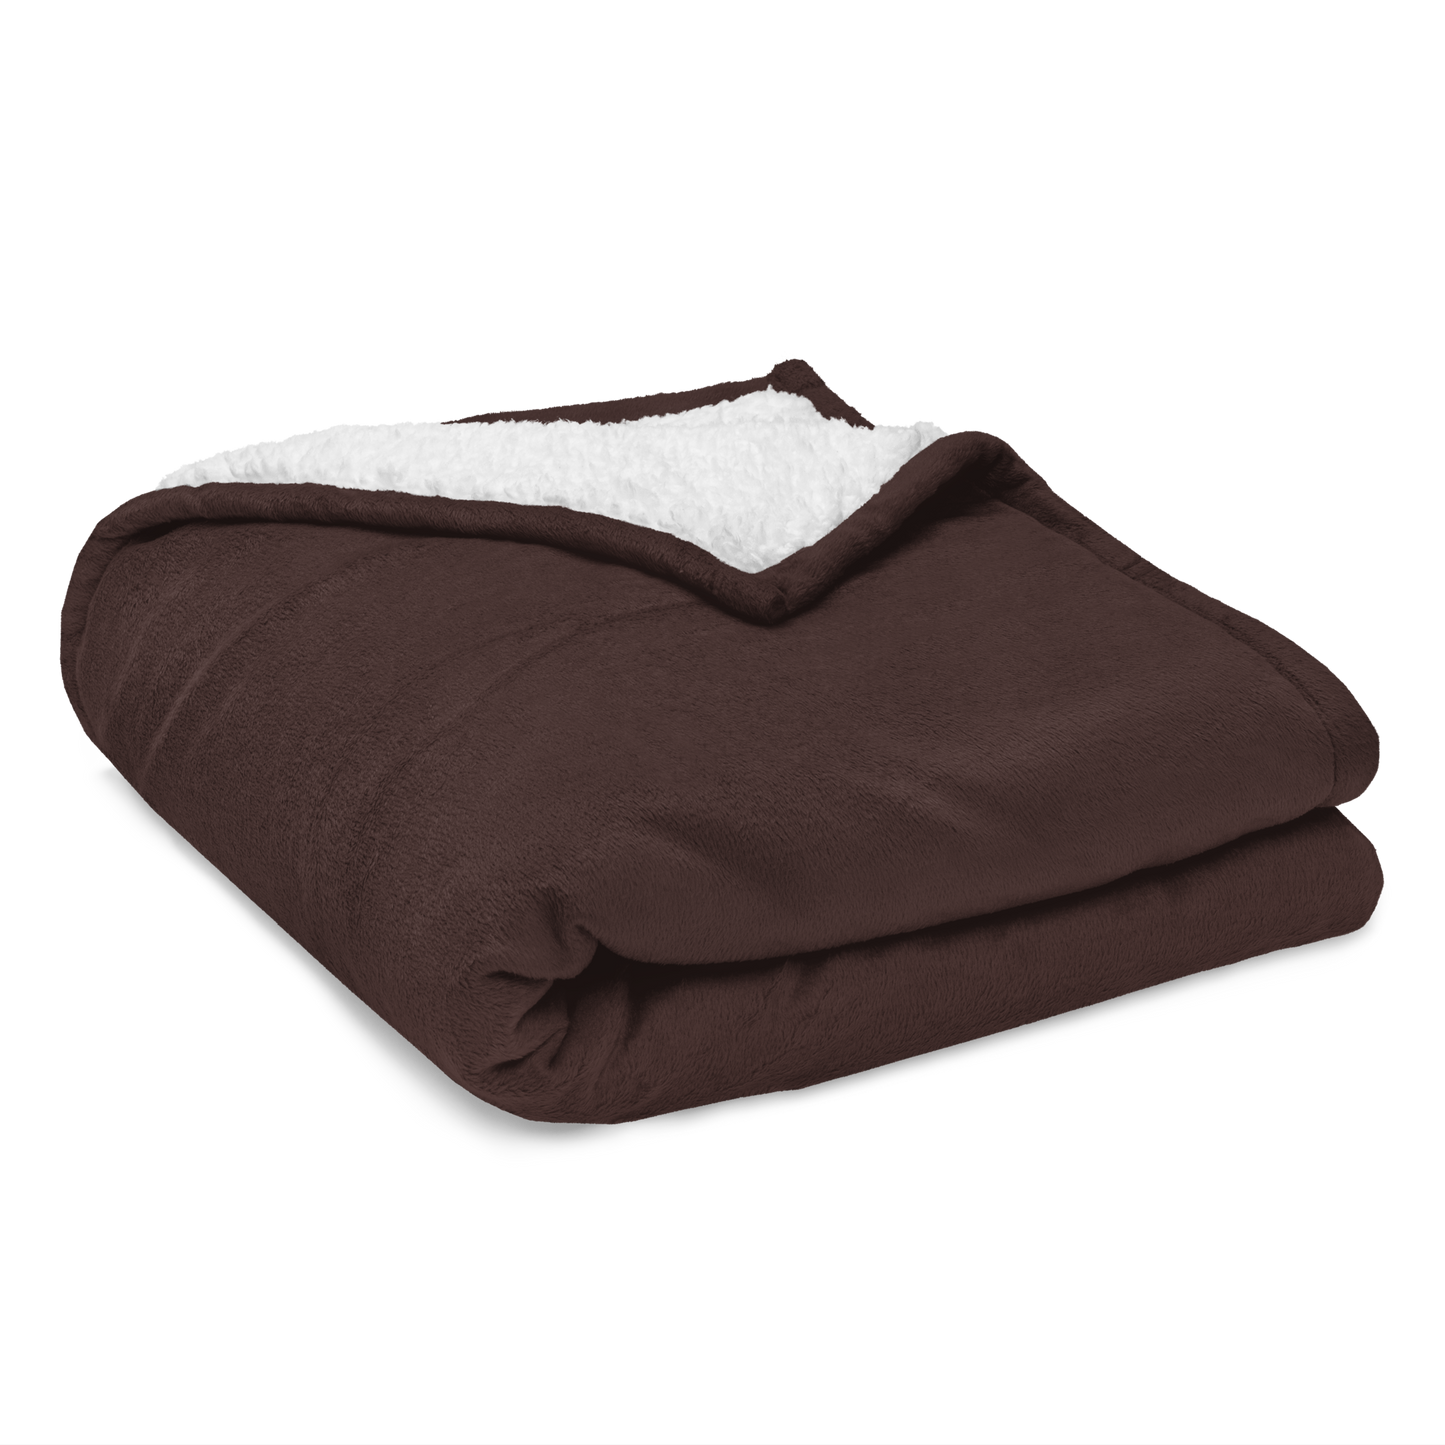 JLL Premium sherpa blanket